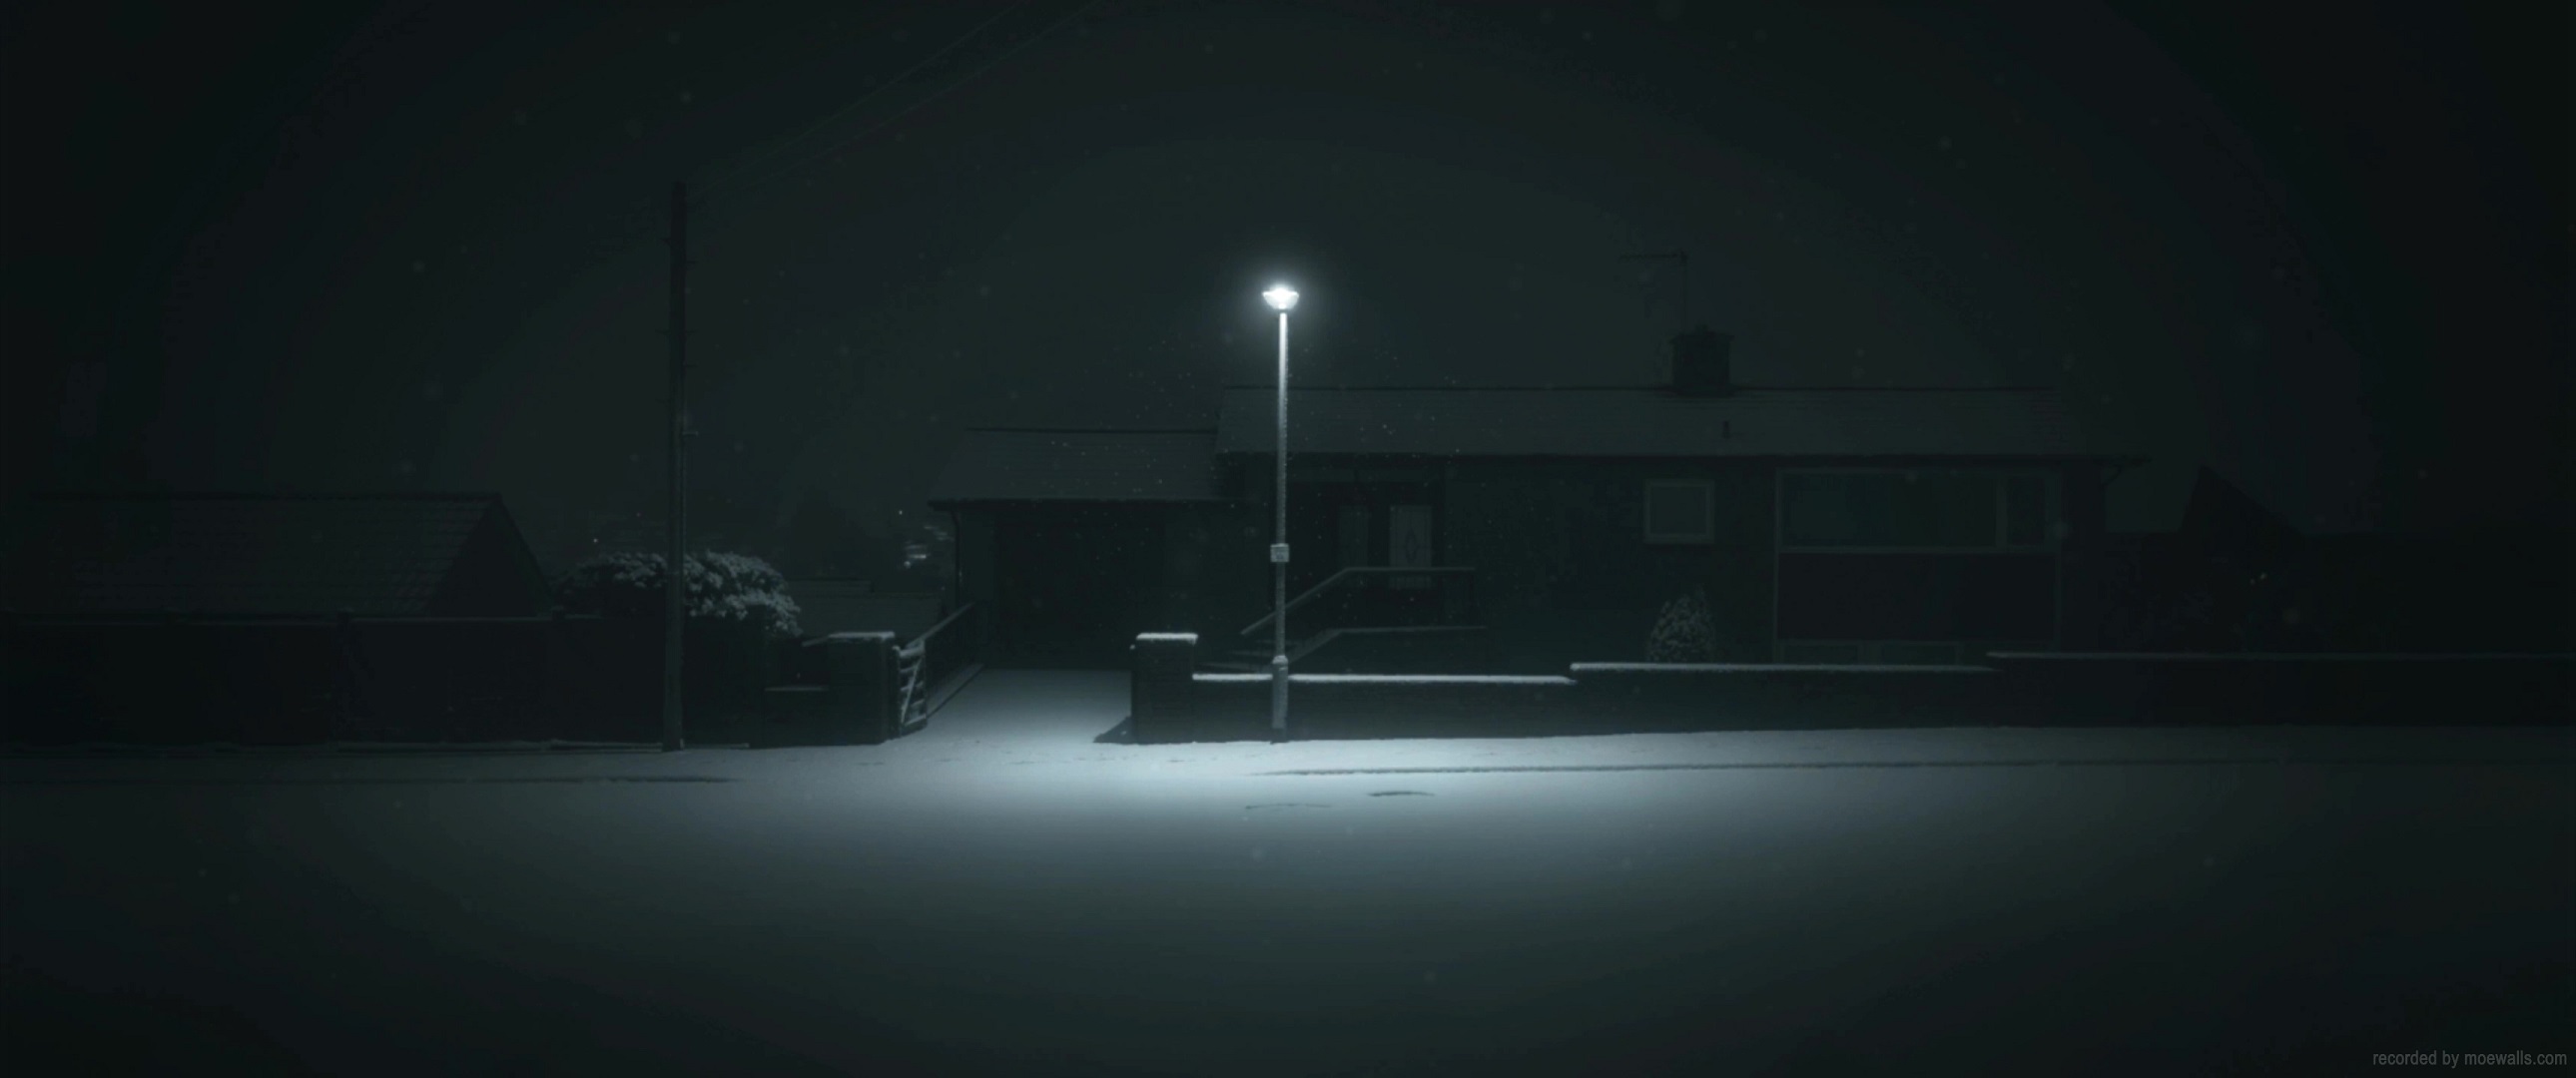 Winter Snow Street Light Live Wallpaper - MoeWalls